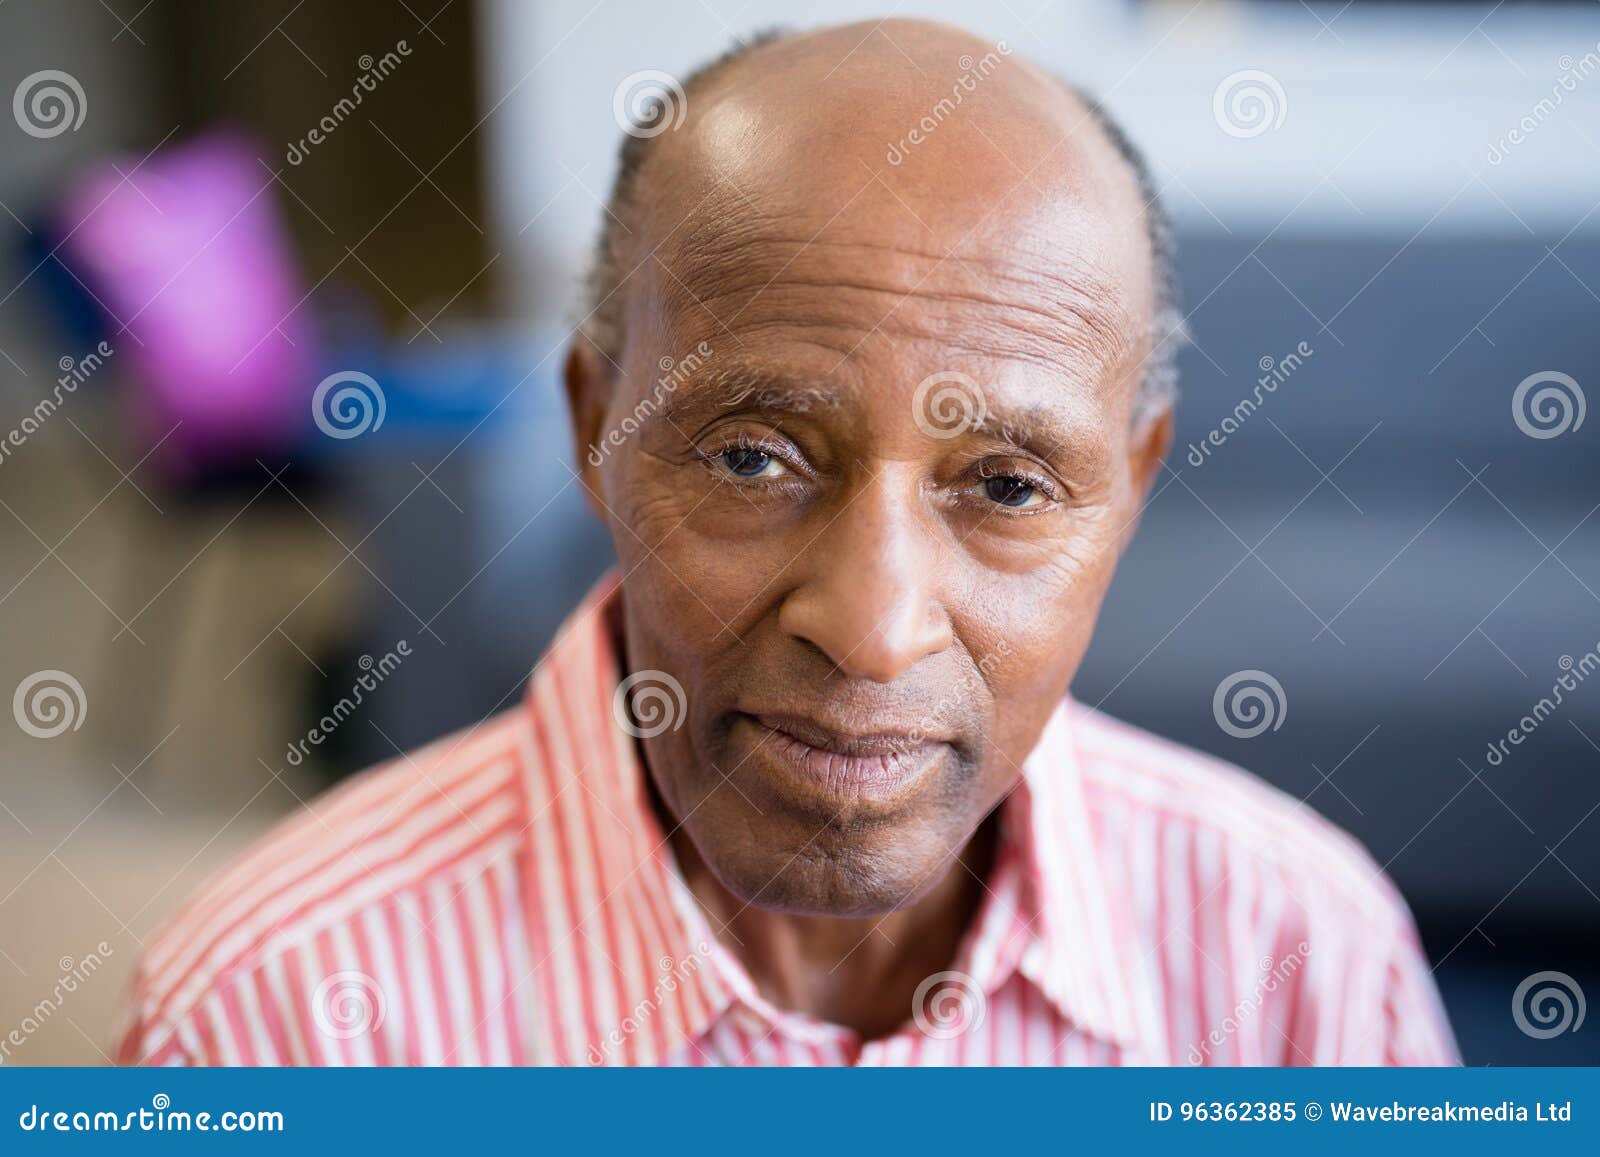 portrait of senior man with receding hairline